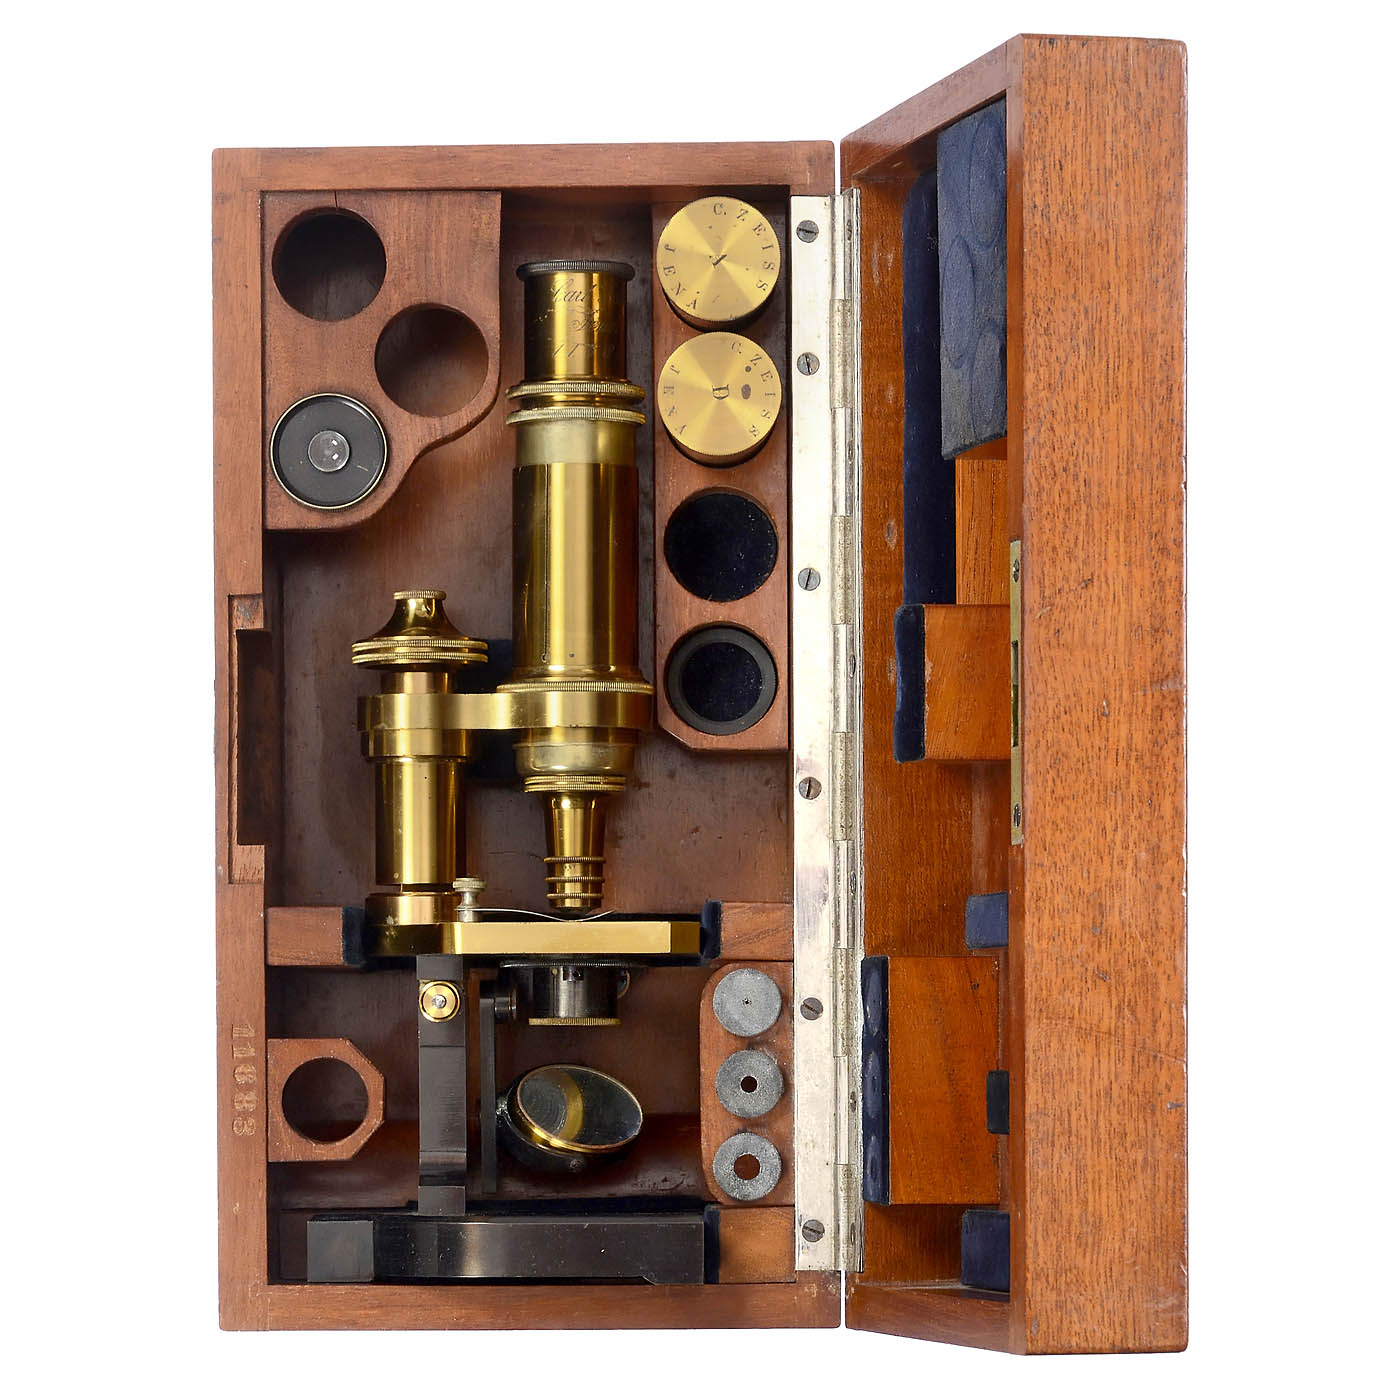 2 Brass Microscopes - Image 2 of 3